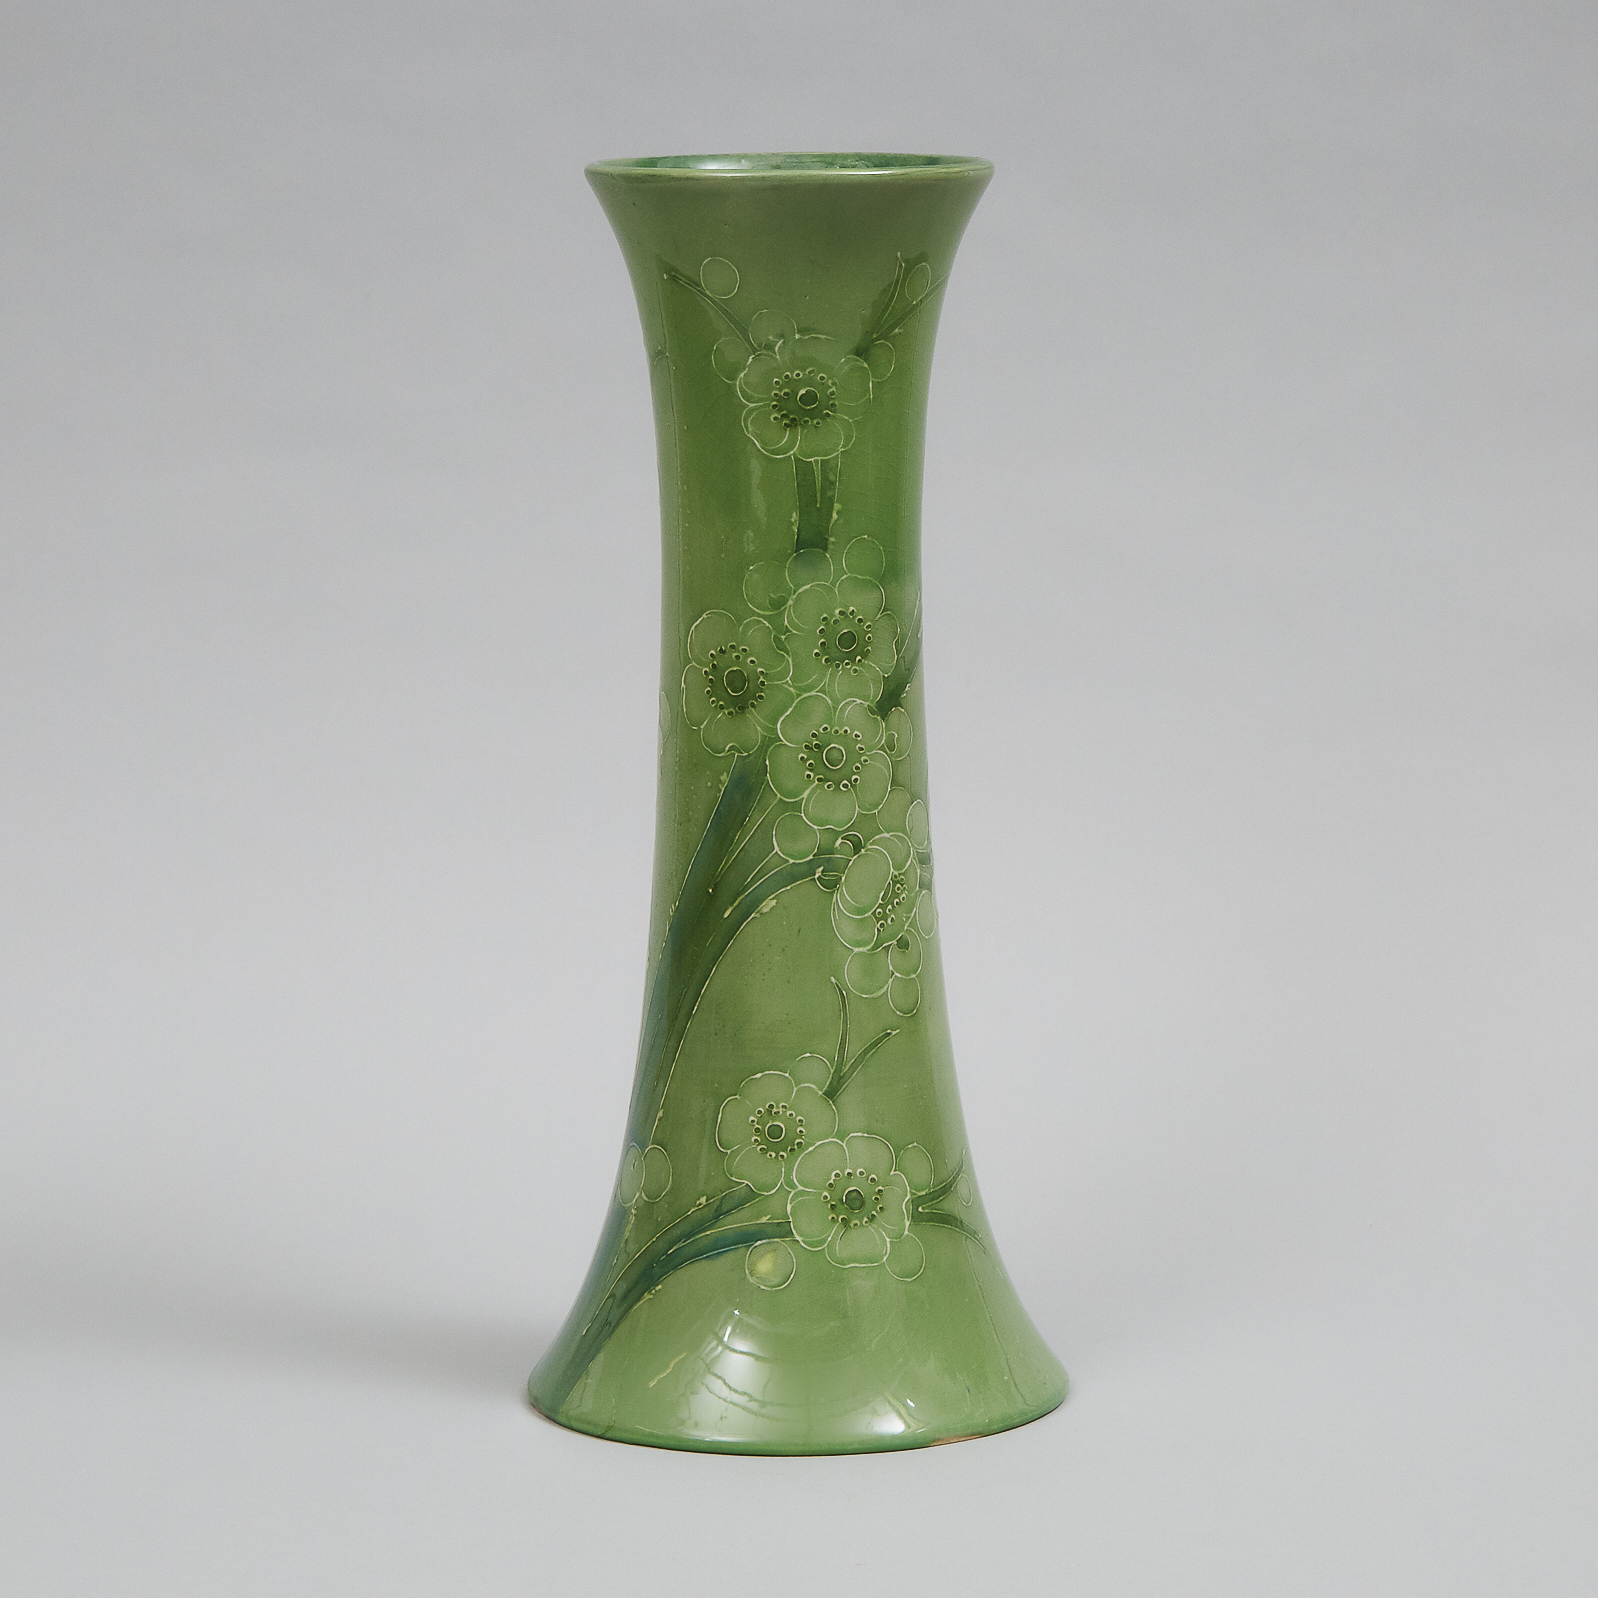 Moorcroft Green Glazed Prunus Vase, for Spaulding & Co., c.1910